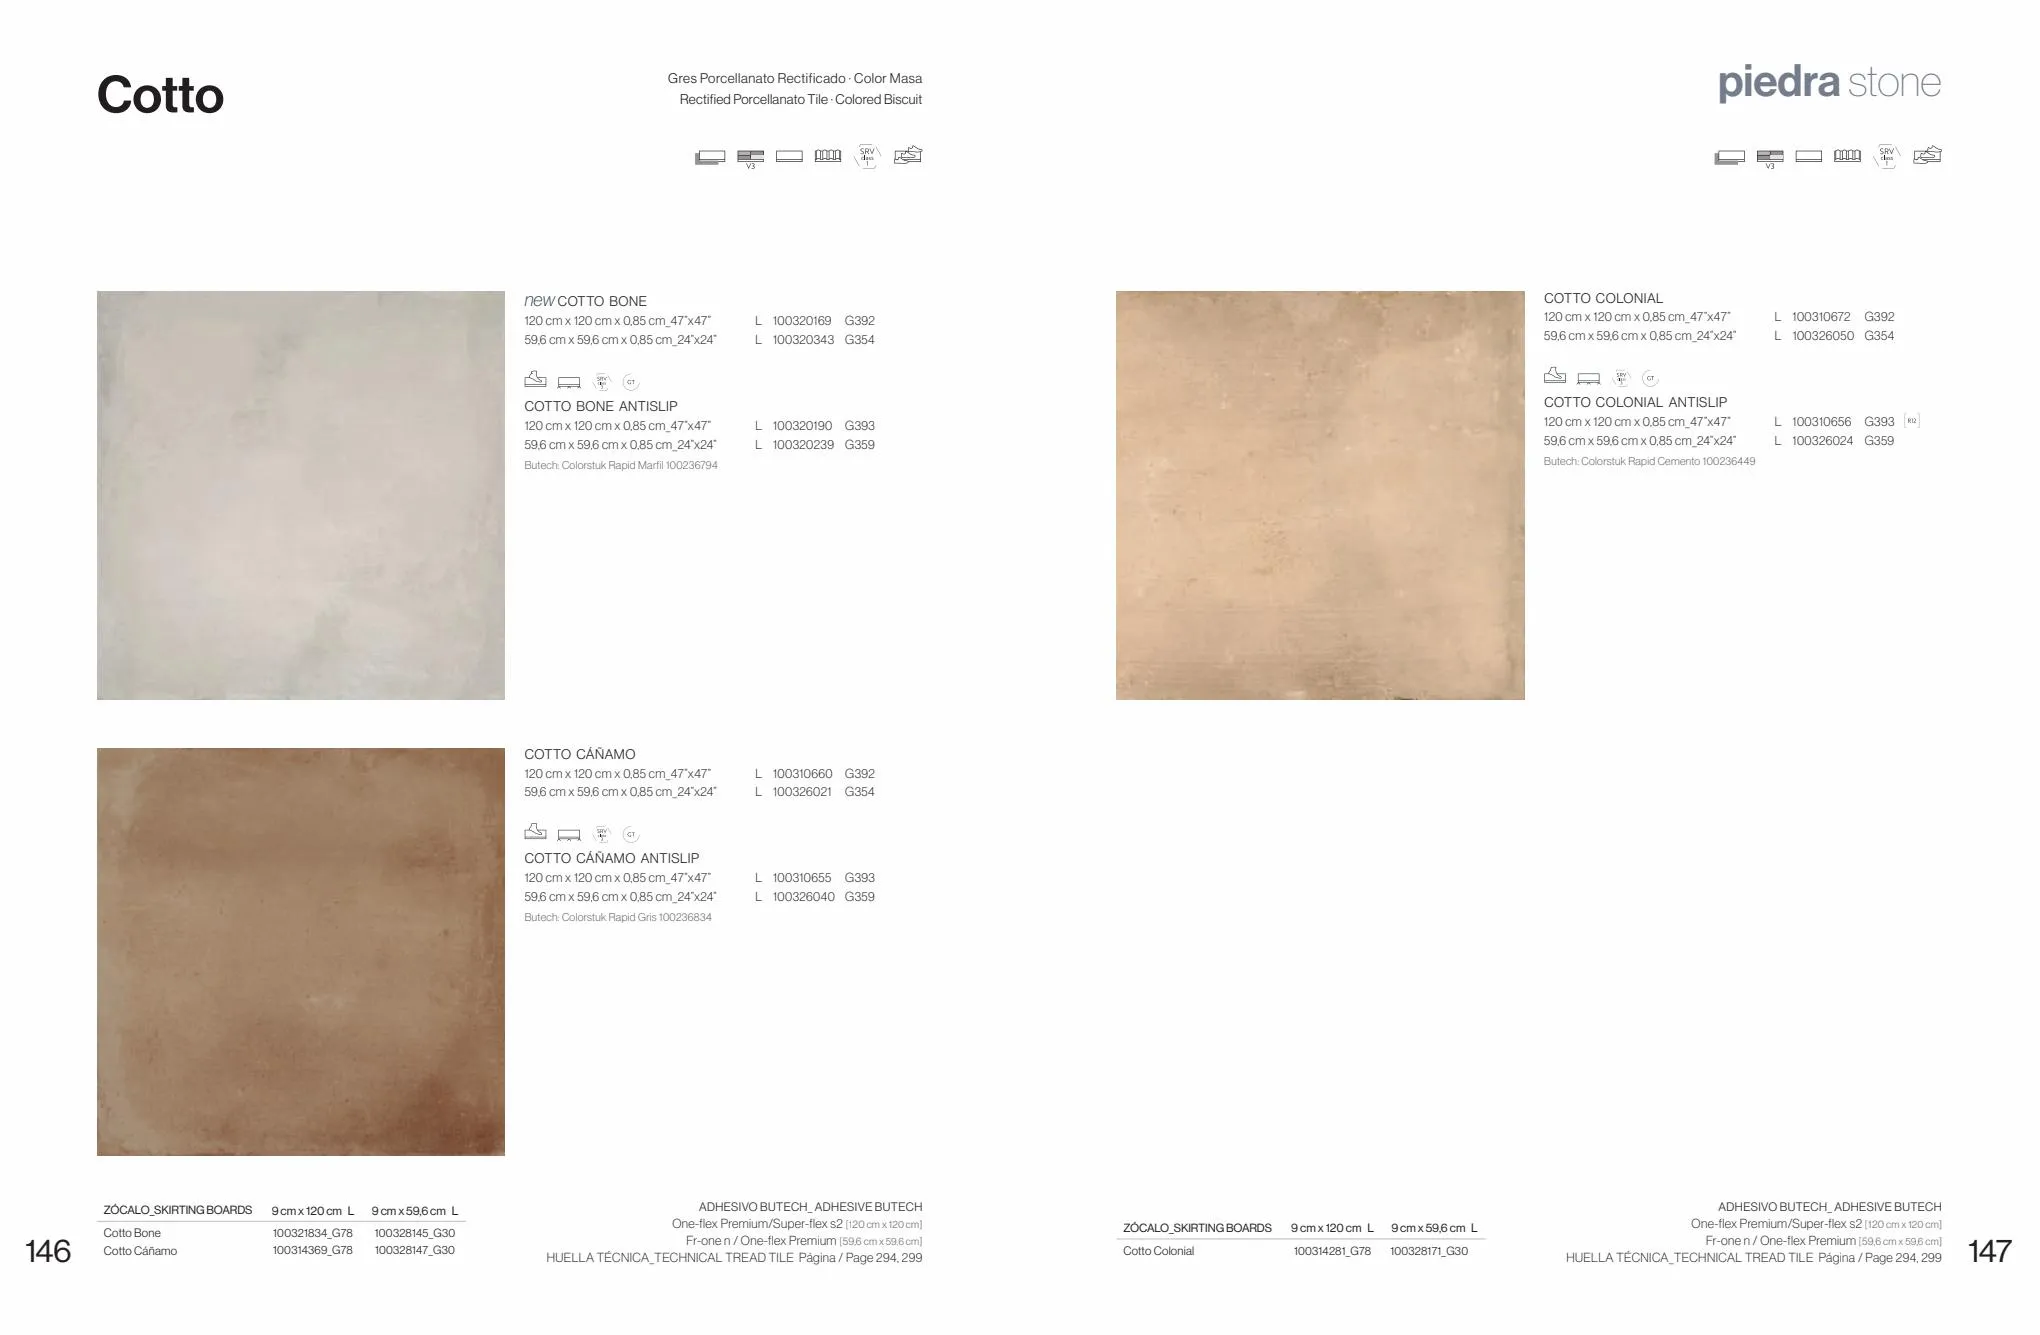 Catalogue Catalogue Porcelanosa, page 00075